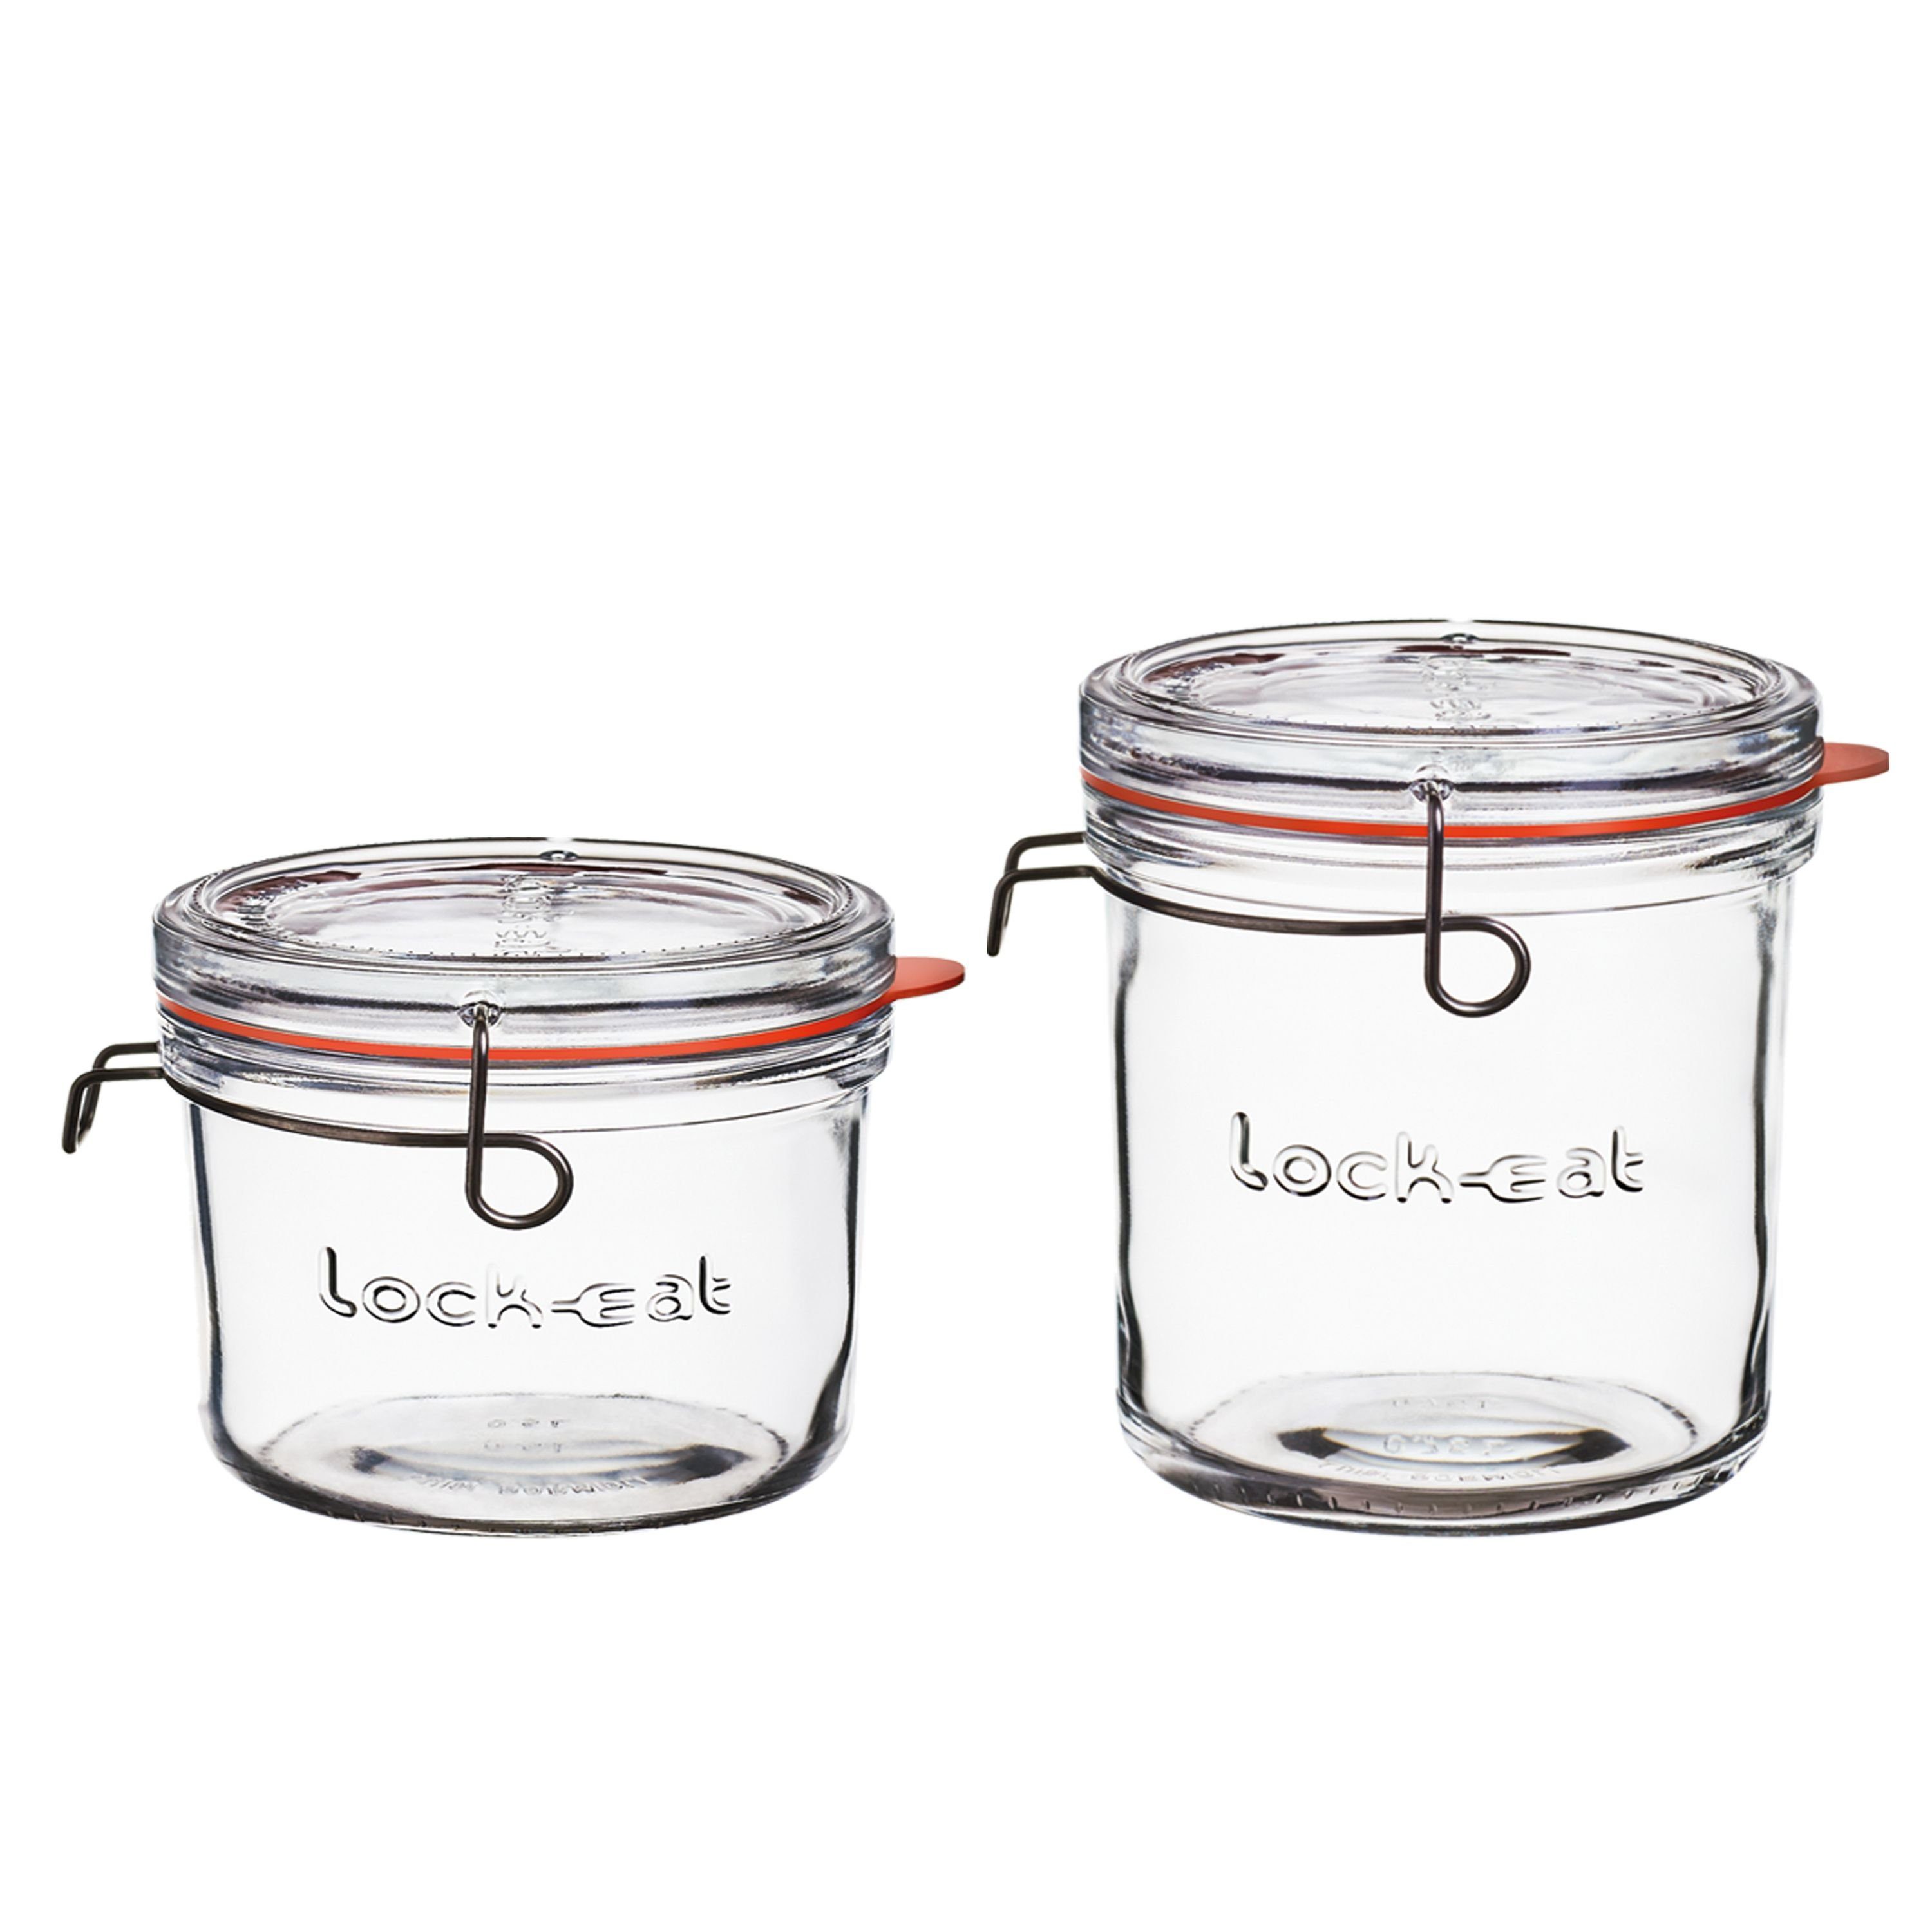 Deckel Luigi Set Einmachgläser 2er Vorratsglas 0,75L, Bormioli 0,5L Lock-Eat + Glas - mit